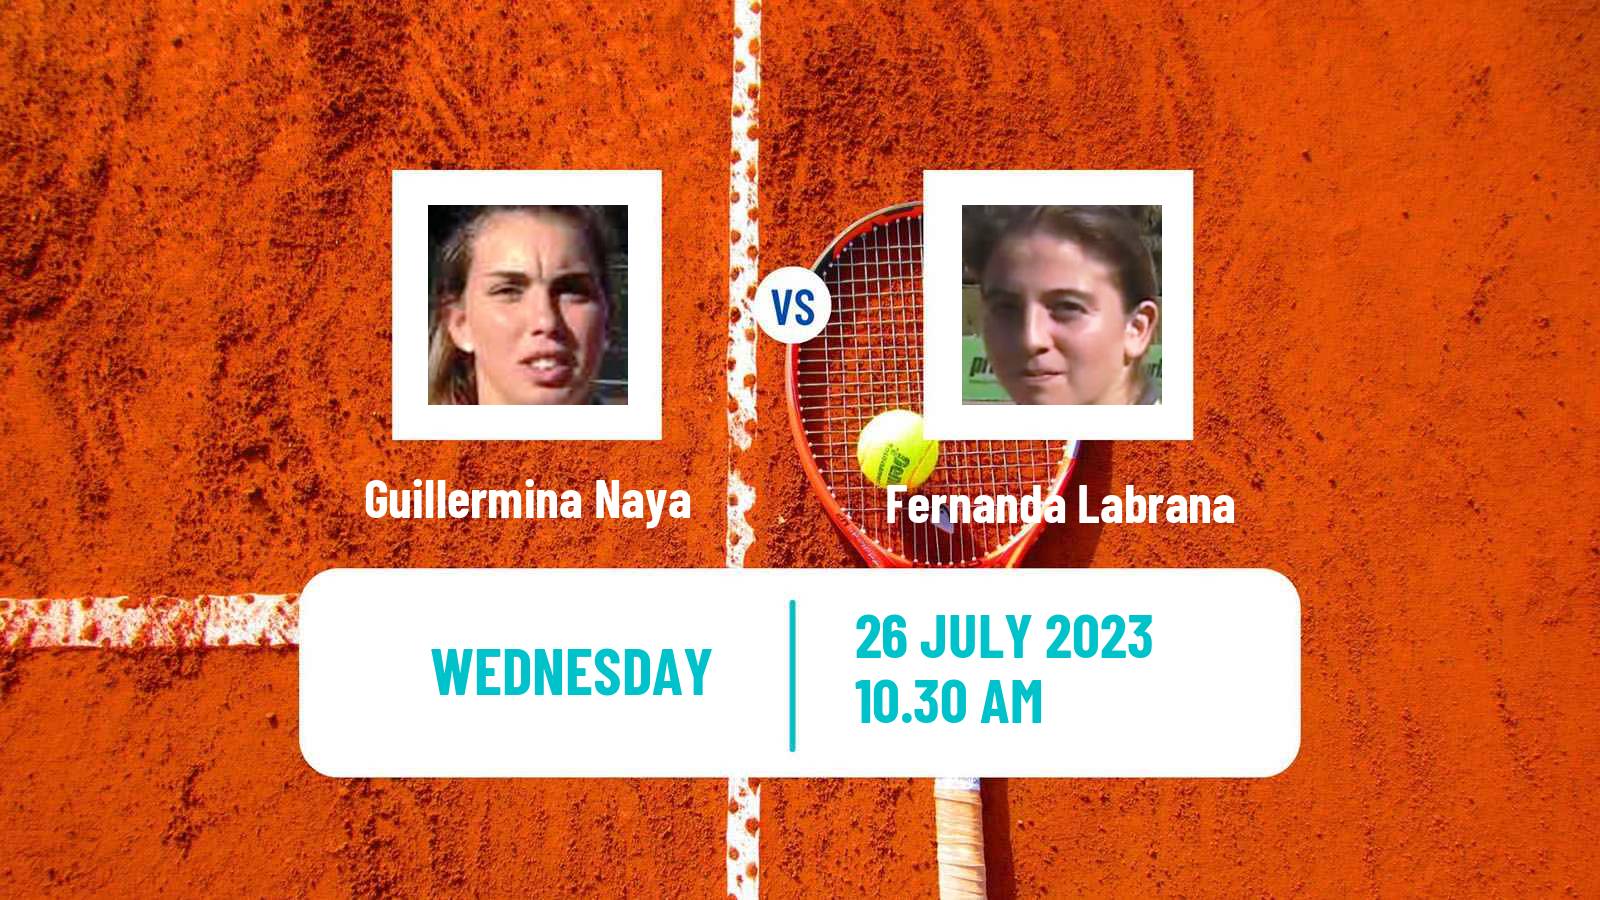 Tennis ITF W25 Bragado Women Guillermina Naya - Fernanda Labrana